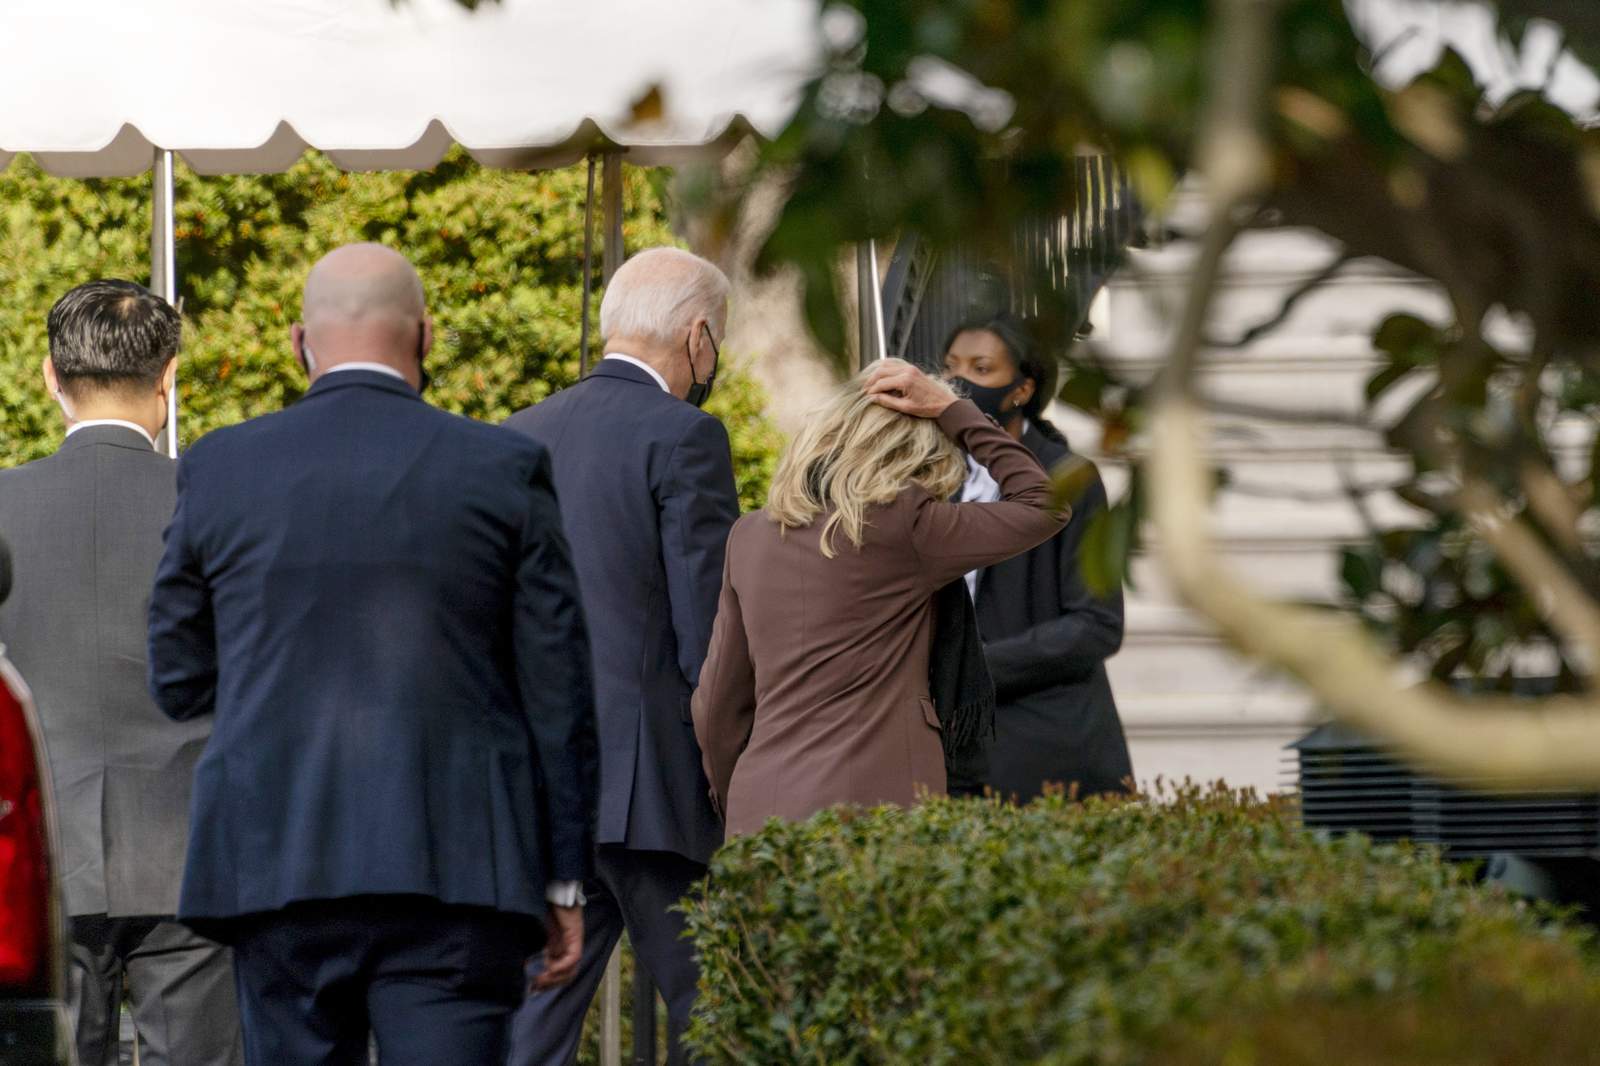 White House: Jill Biden 'tolerated' medical procedure 'well'